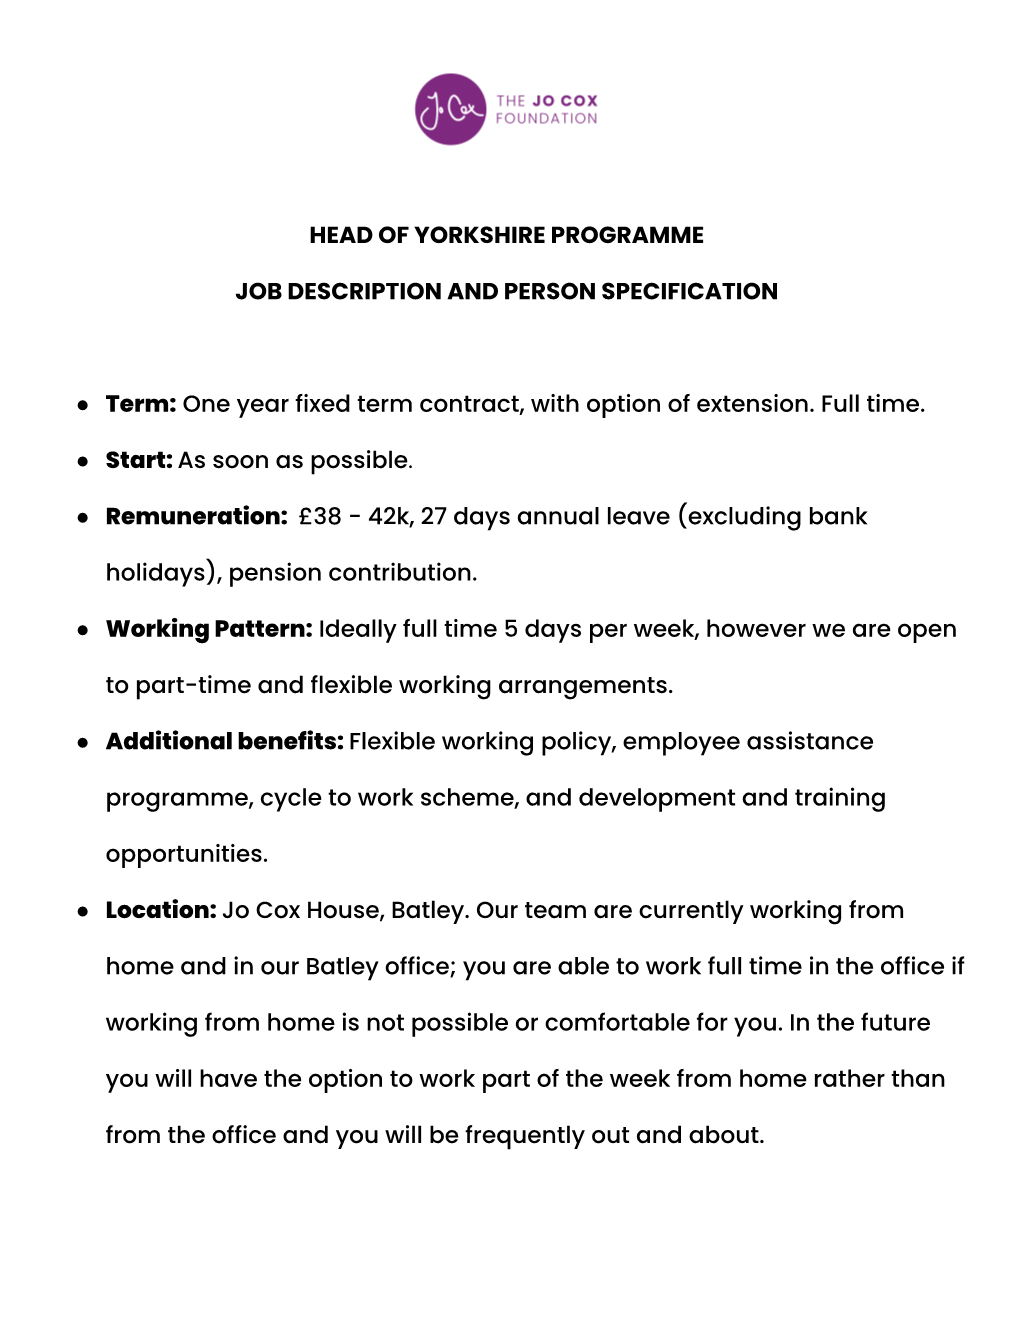 Head of Yorkshire Programme Job Description And